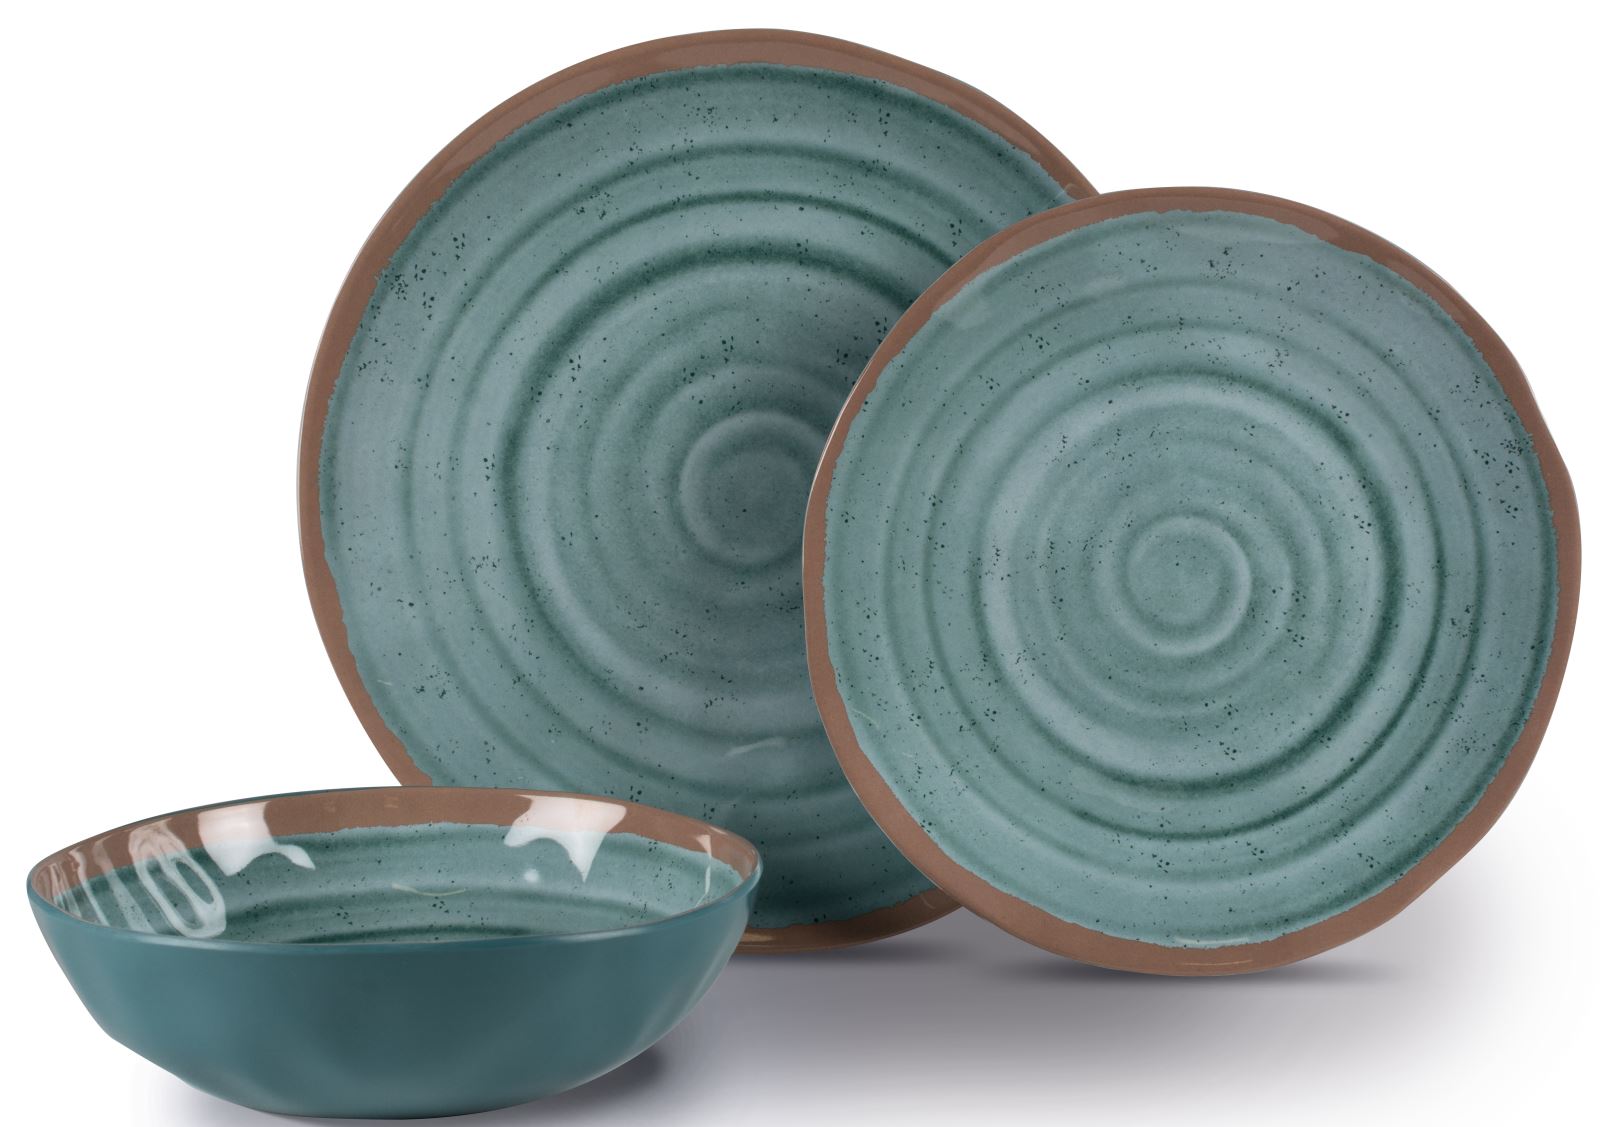 Terracotta tableware